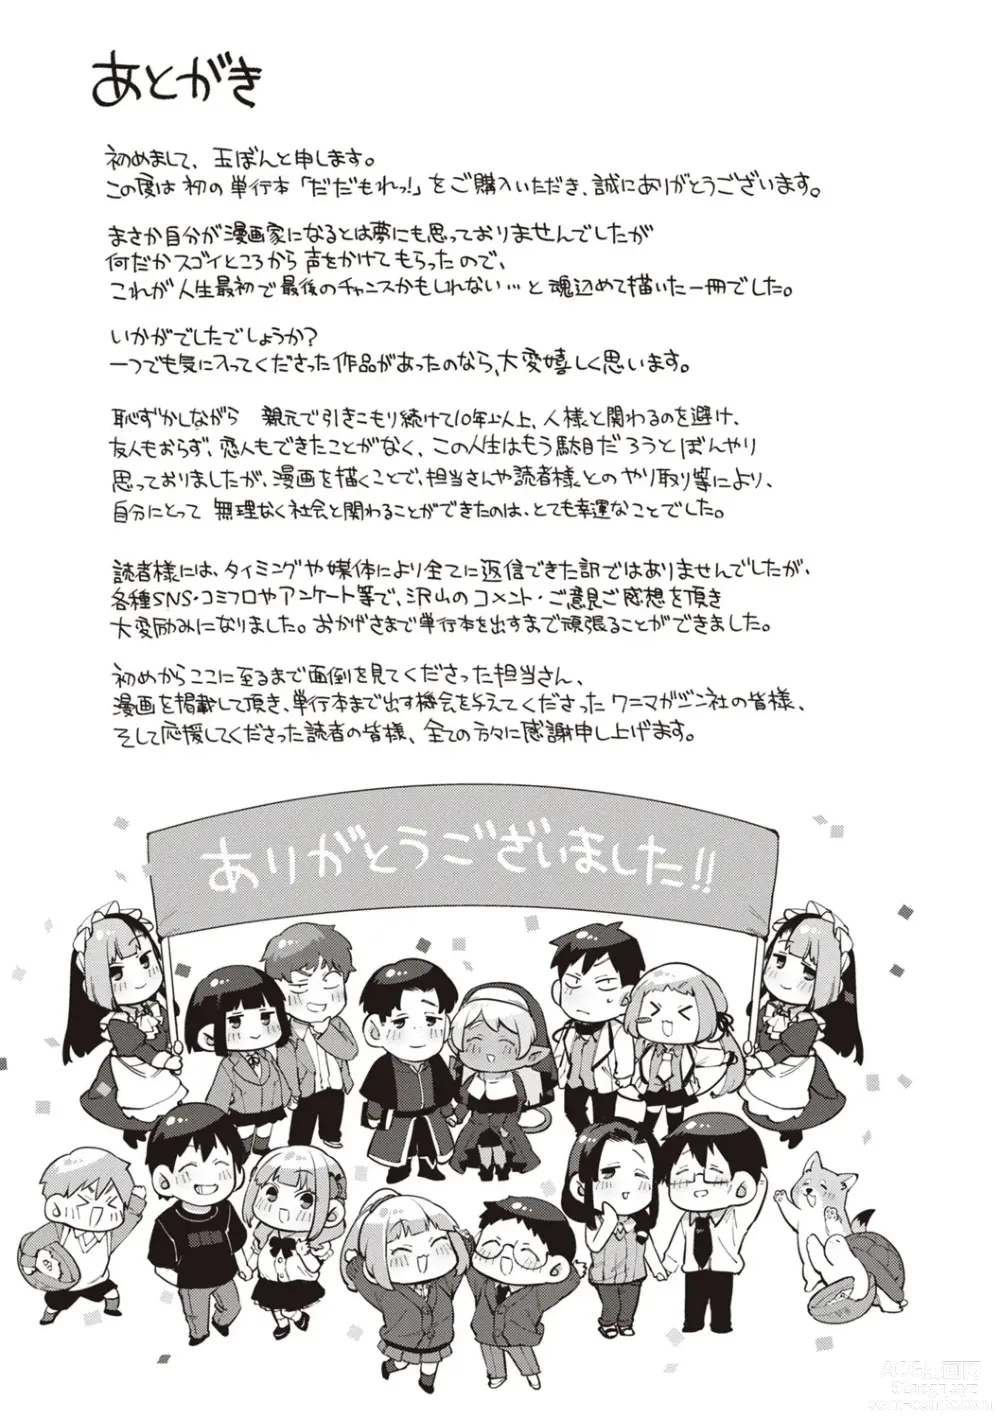 Page 184 of manga DA-DA-MO-RE